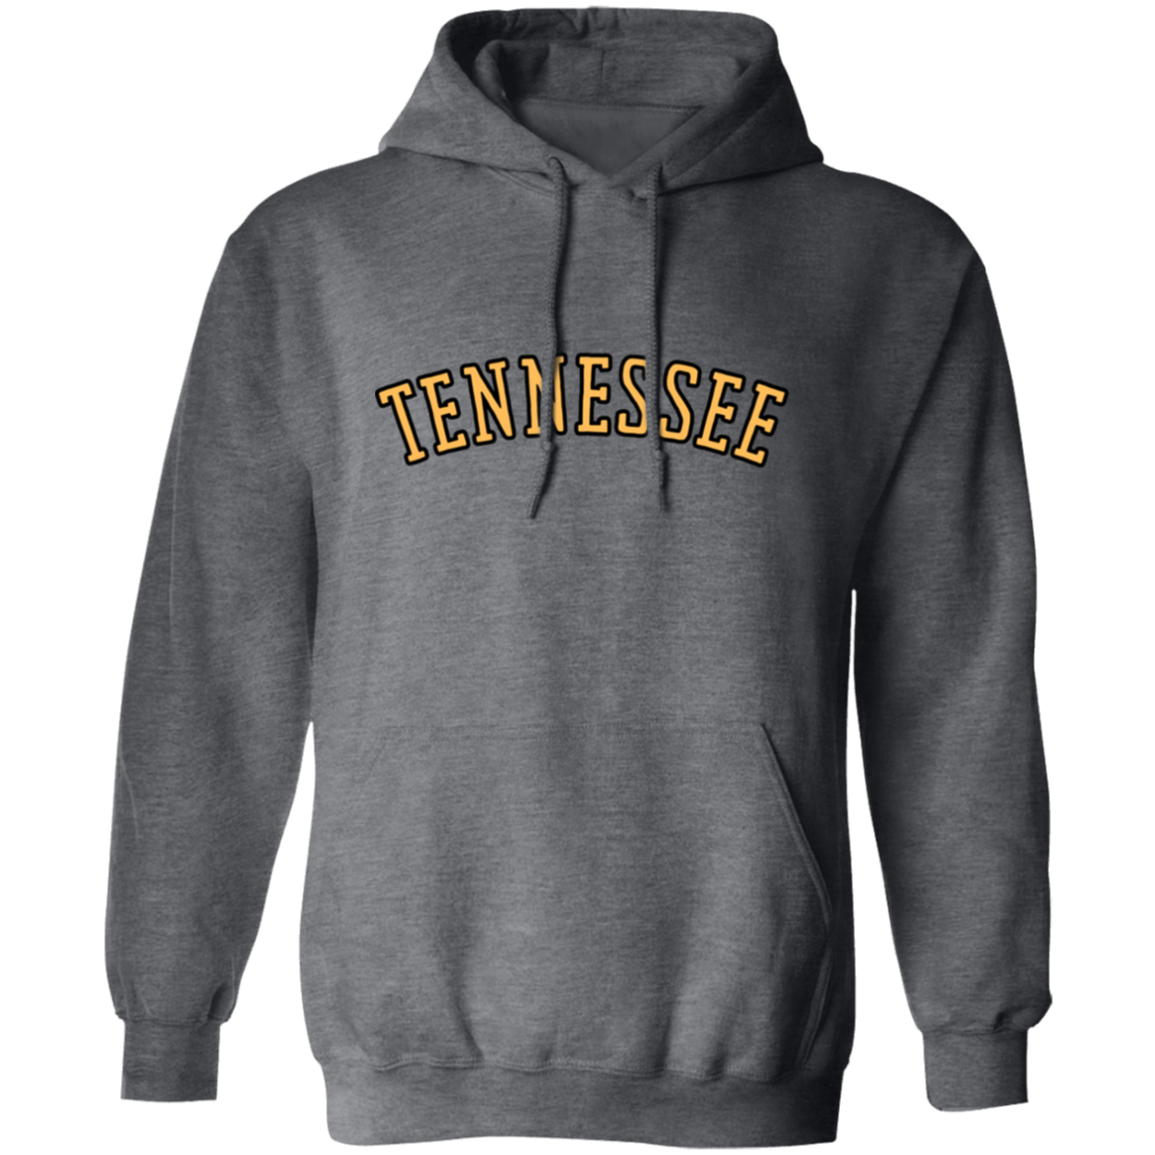 College Pullover Hoodie, Tennessee Hoodie, Birthday Gift